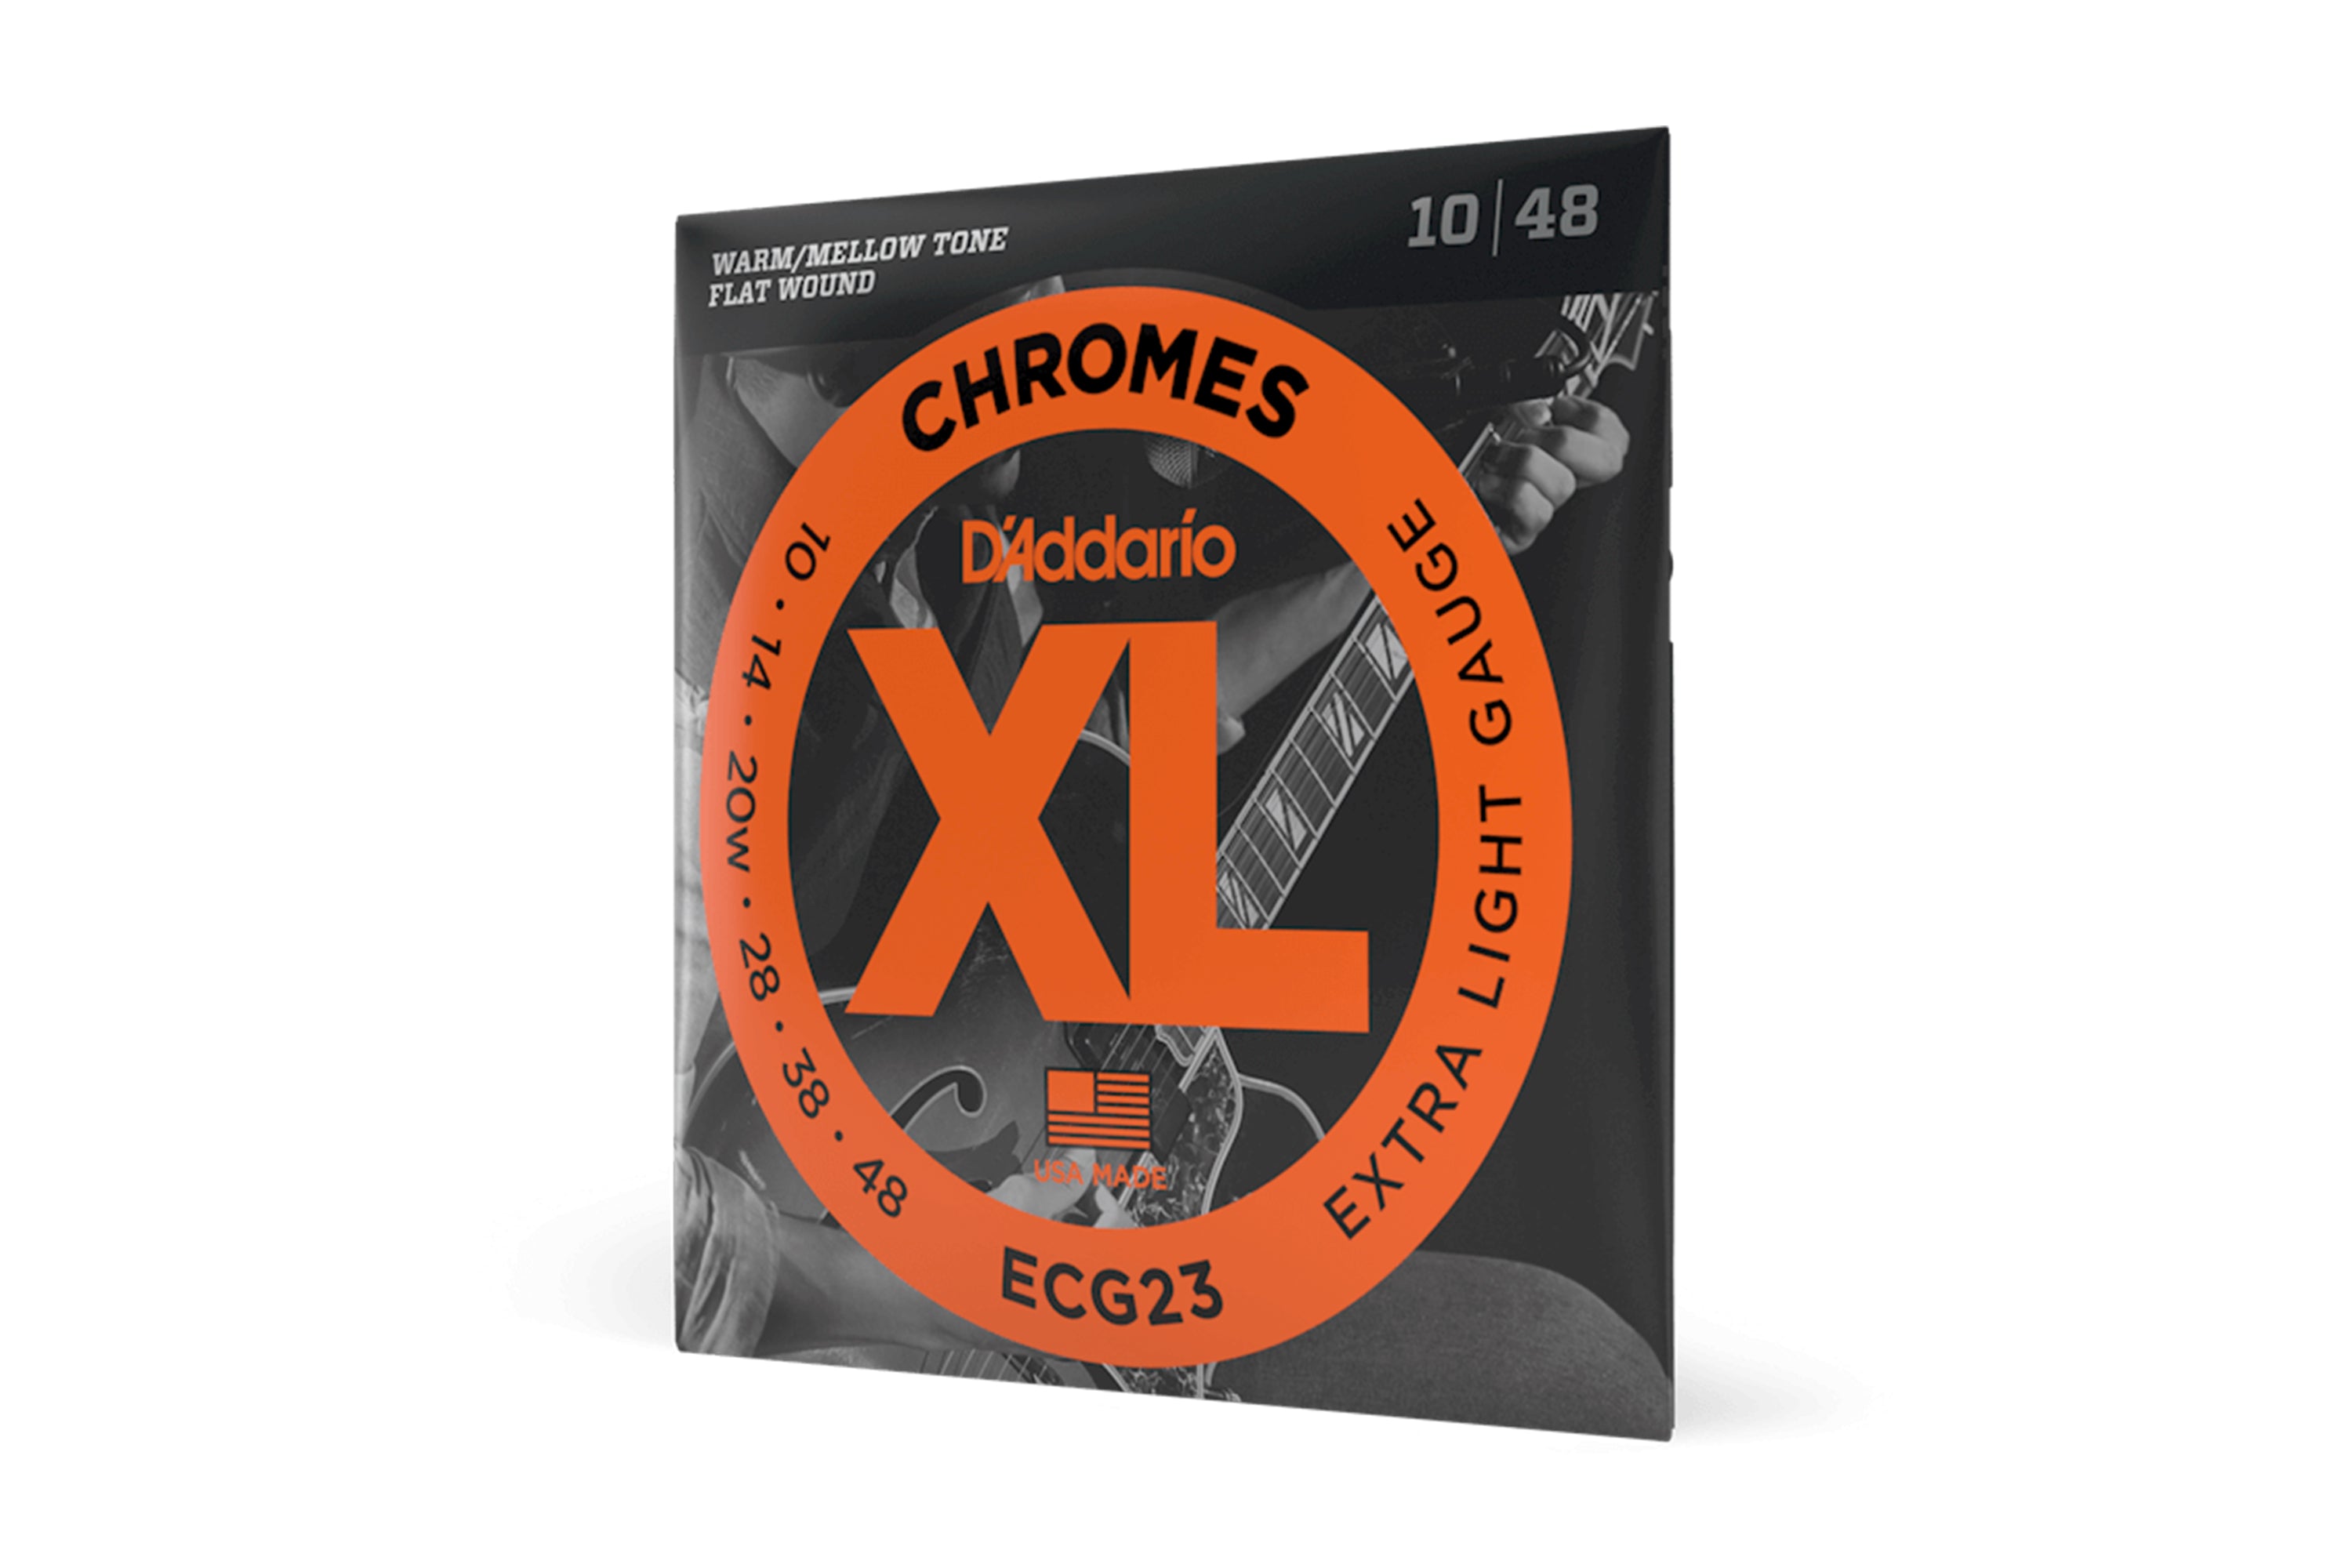 D'Addario ECG23 XL Strings